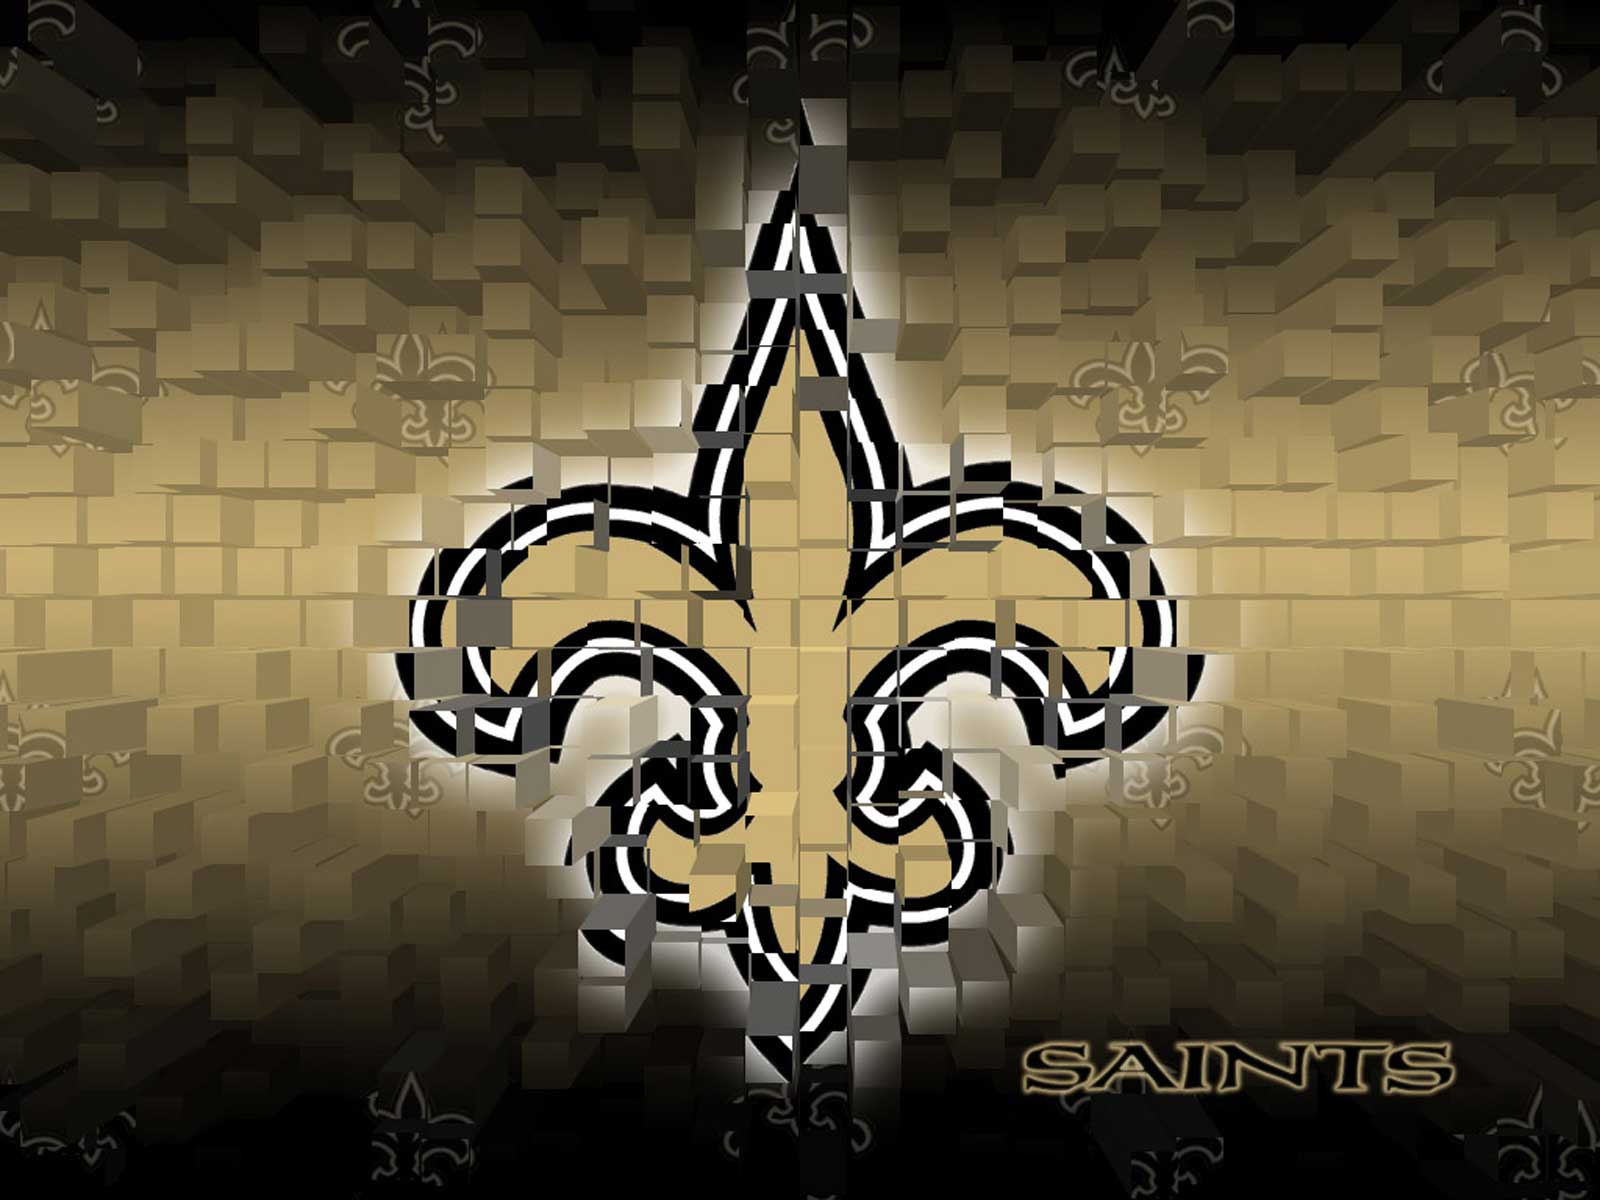  Saints wallpaper desktop wallpaper New Orleans Saints wallpapers